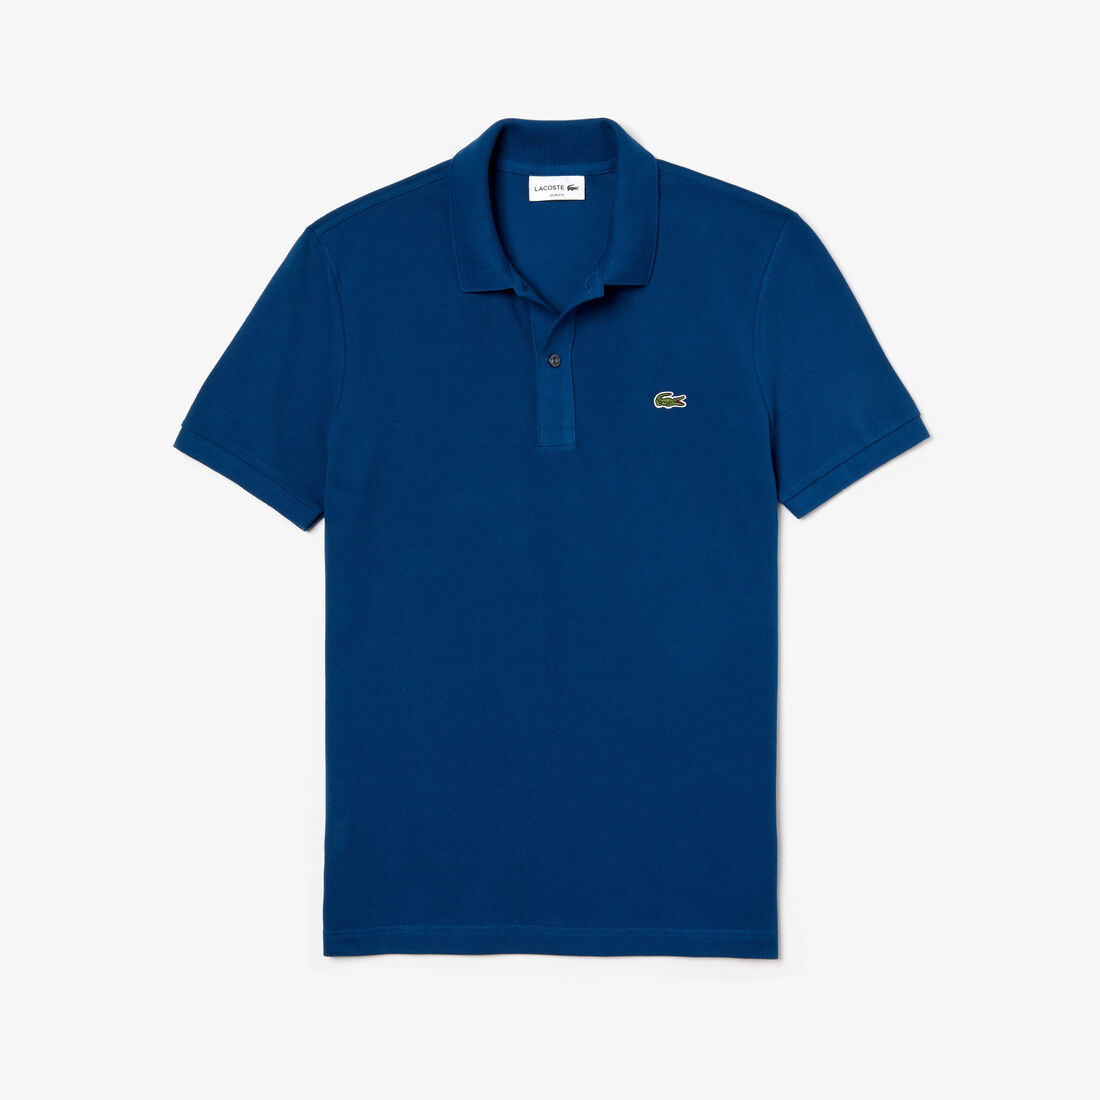 Lacoste Slim Fit In Petit Piqué Polo Shirts Herren Blau | TJNR-17284